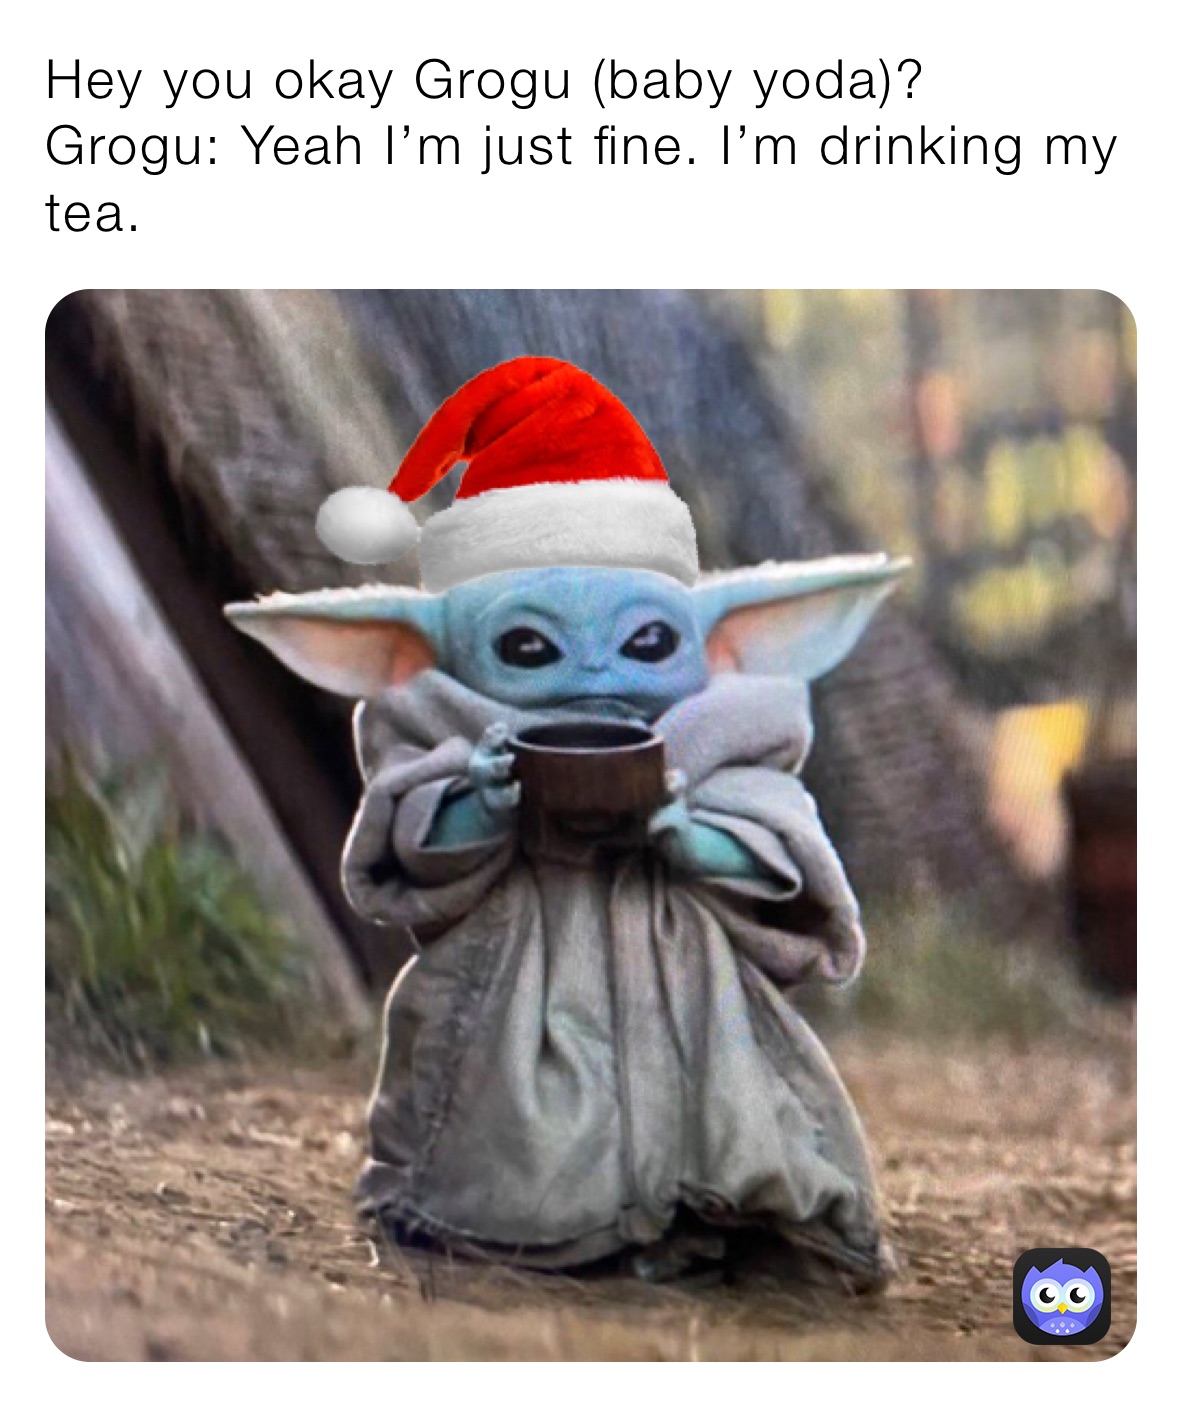 Hey you okay Grogu (baby yoda)? 
Grogu: Yeah I’m just fine. I’m drinking my tea.